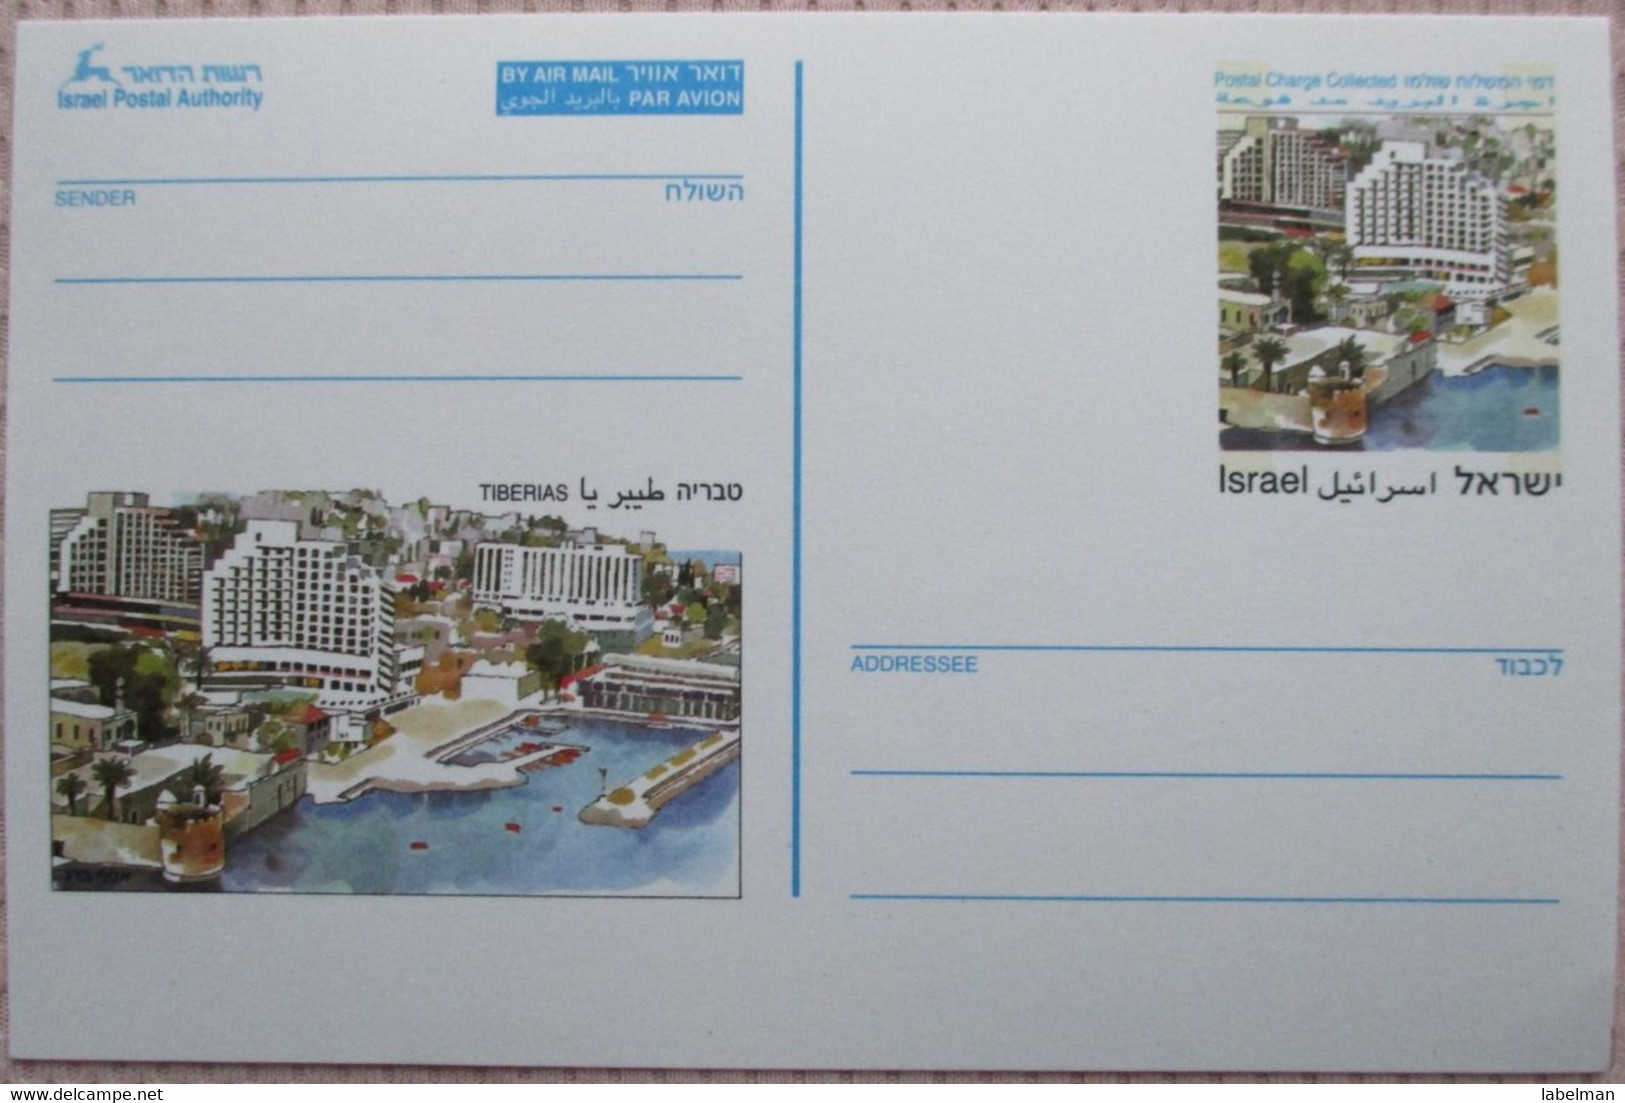 ISRAEL POSTAL AUTHORITY TIBERIAS HOTEL INLAND PREPAID POSTCARD POSTKARTE CARD ANSICHTSKARTE CARTOLINA CARTE POSTALE PC - Cartoline Maximum